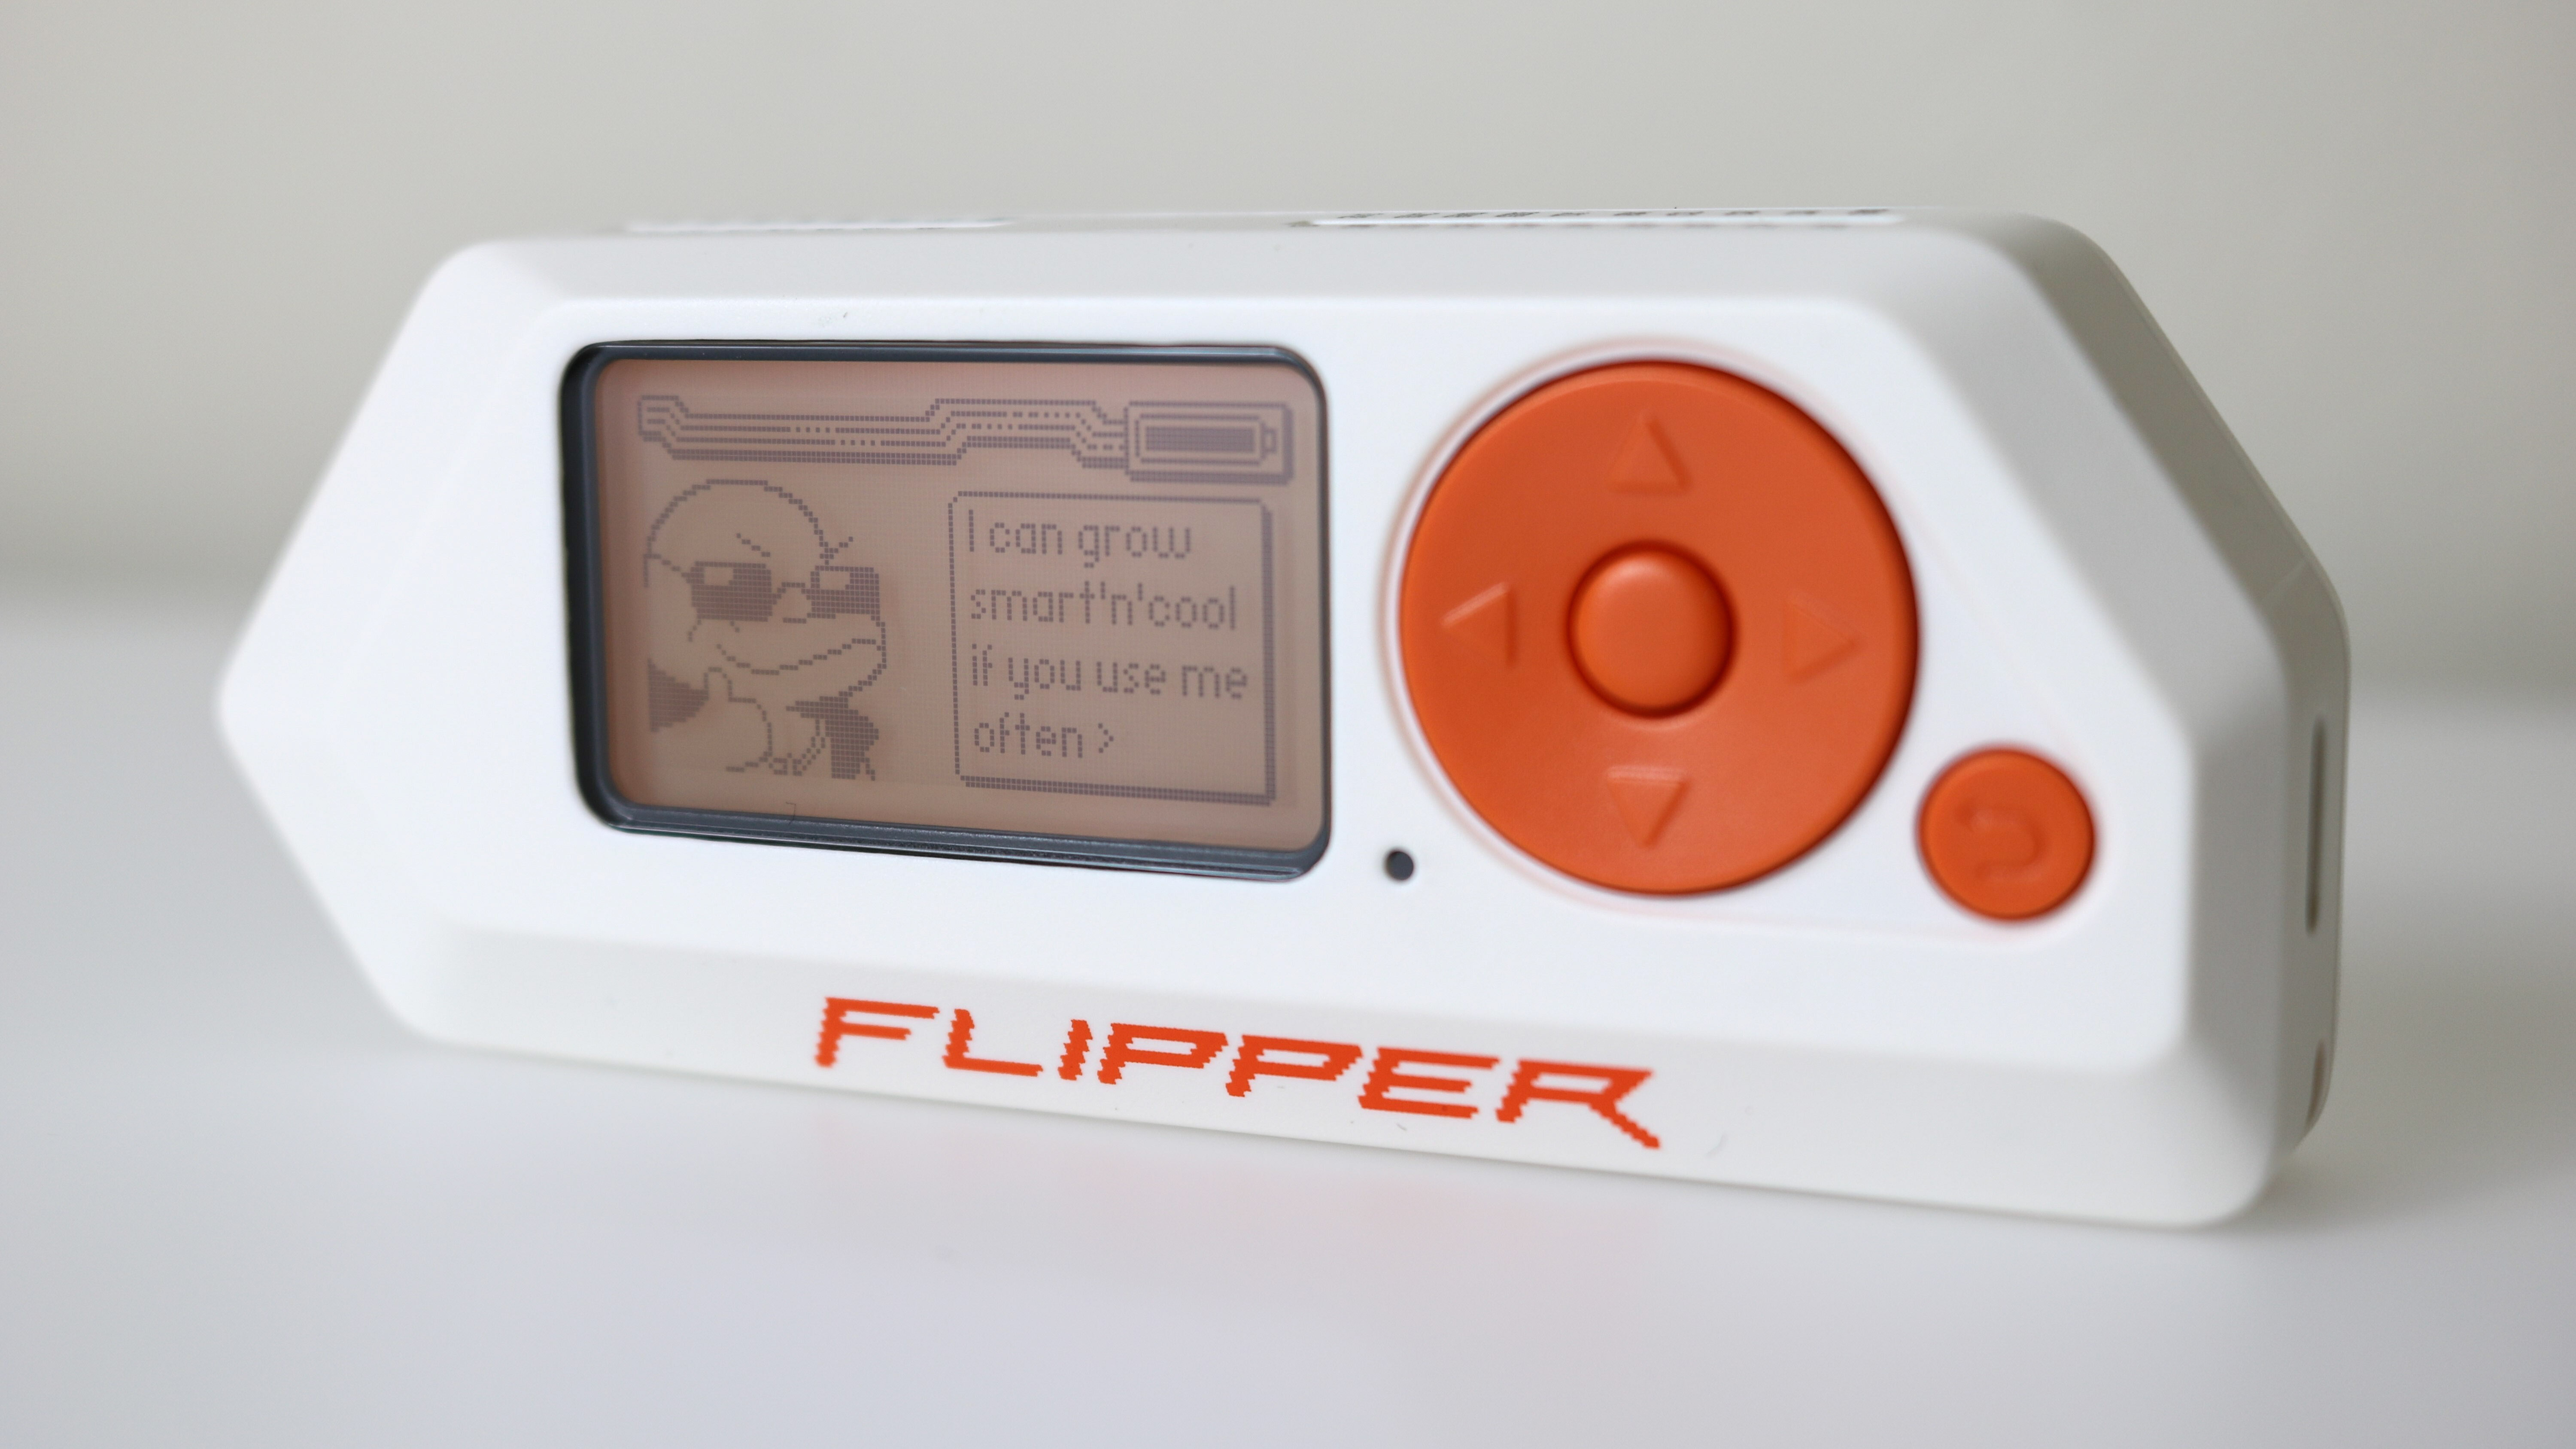 The Flipper Zero has gotten a bad rap but I love this little